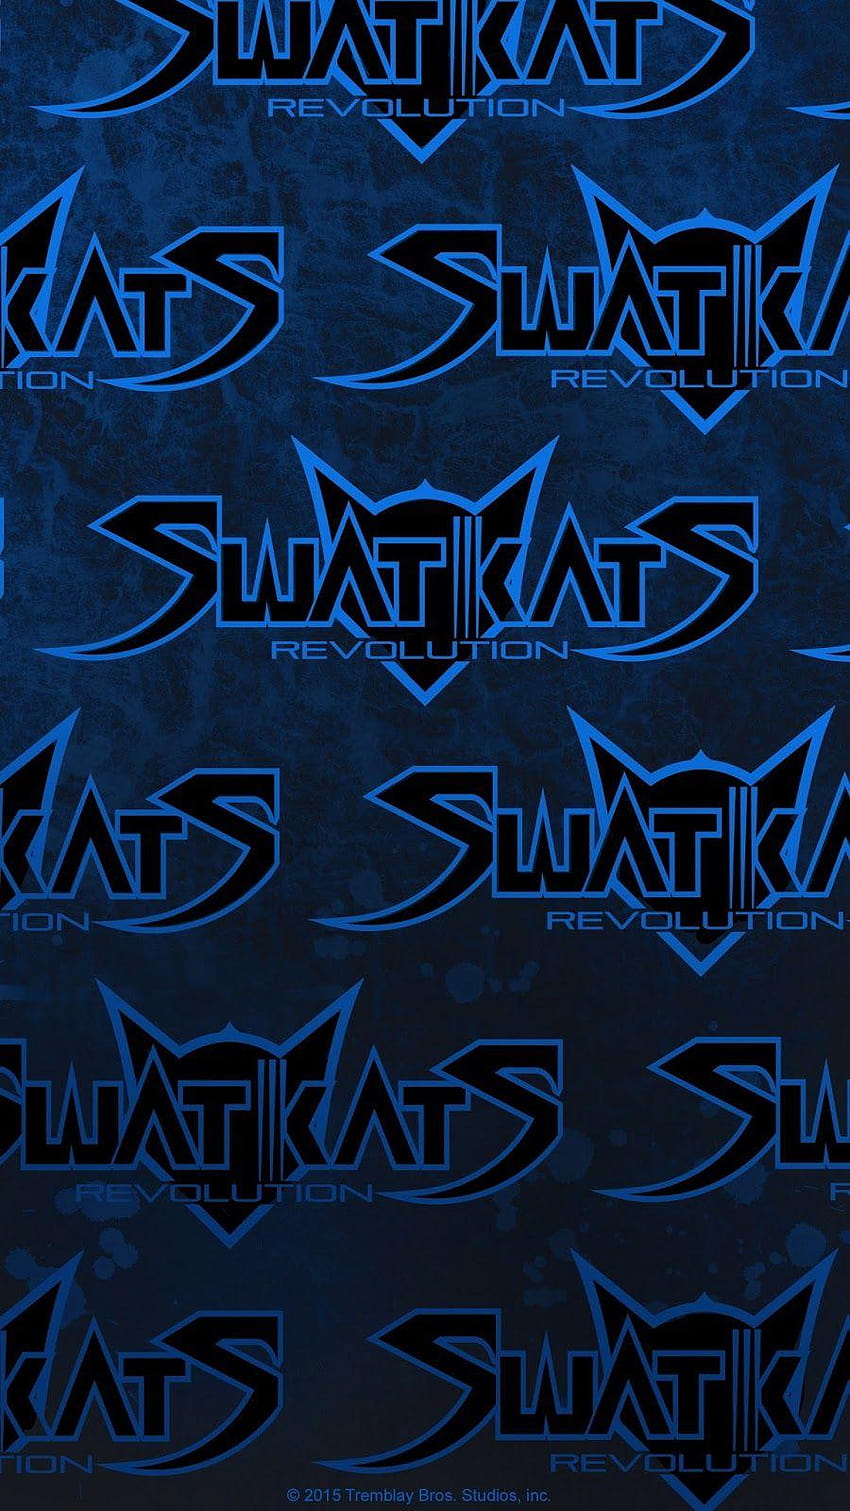 Revolusi Swat Kats: MOBILE wallpaper ponsel HD